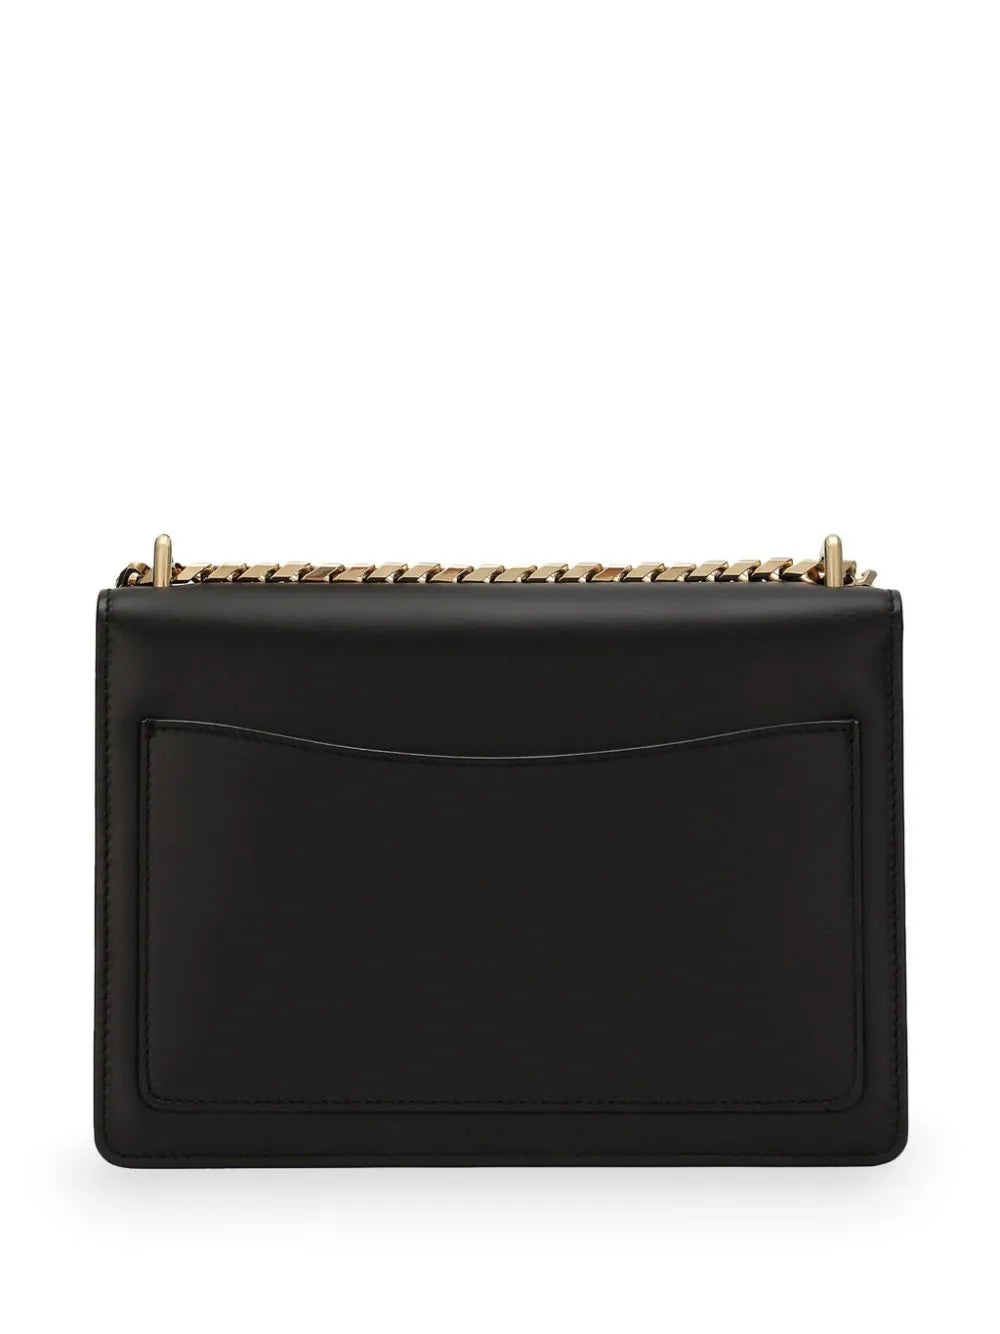 Dolce & Gabbana Bb7599 Woman Black Bag - 3